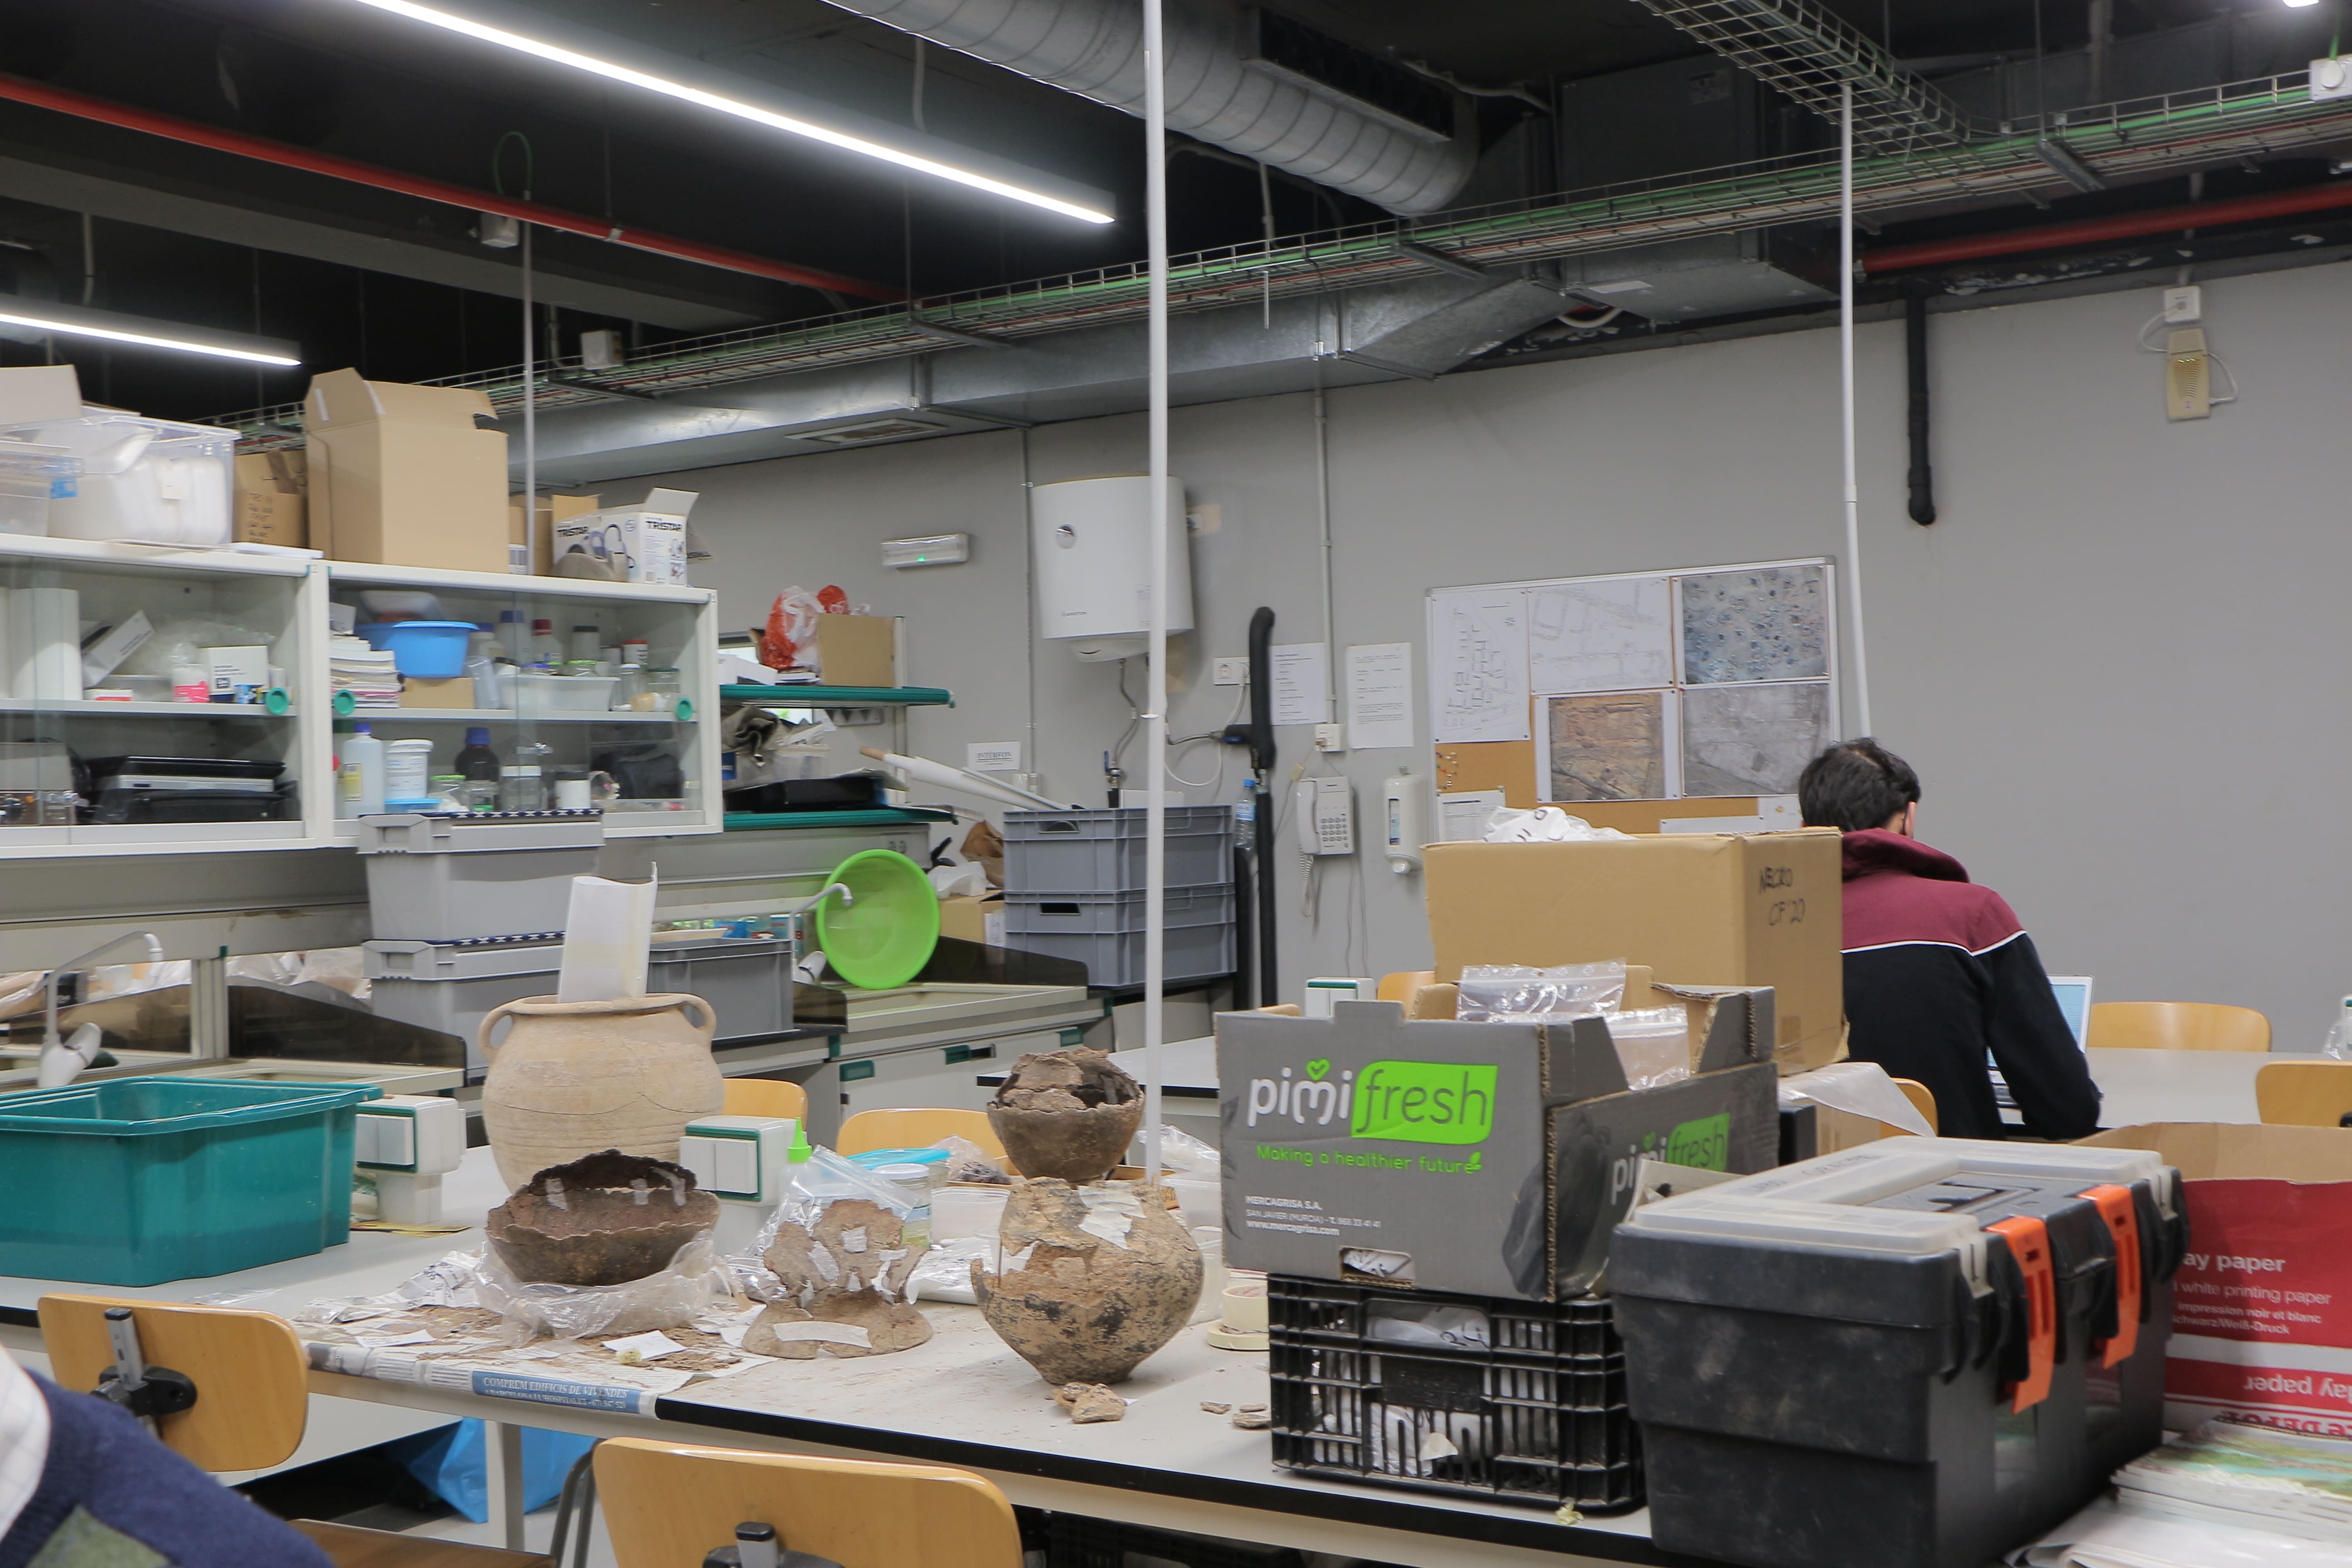 Laboratoris d'Arqueologia i d'Arqueometria